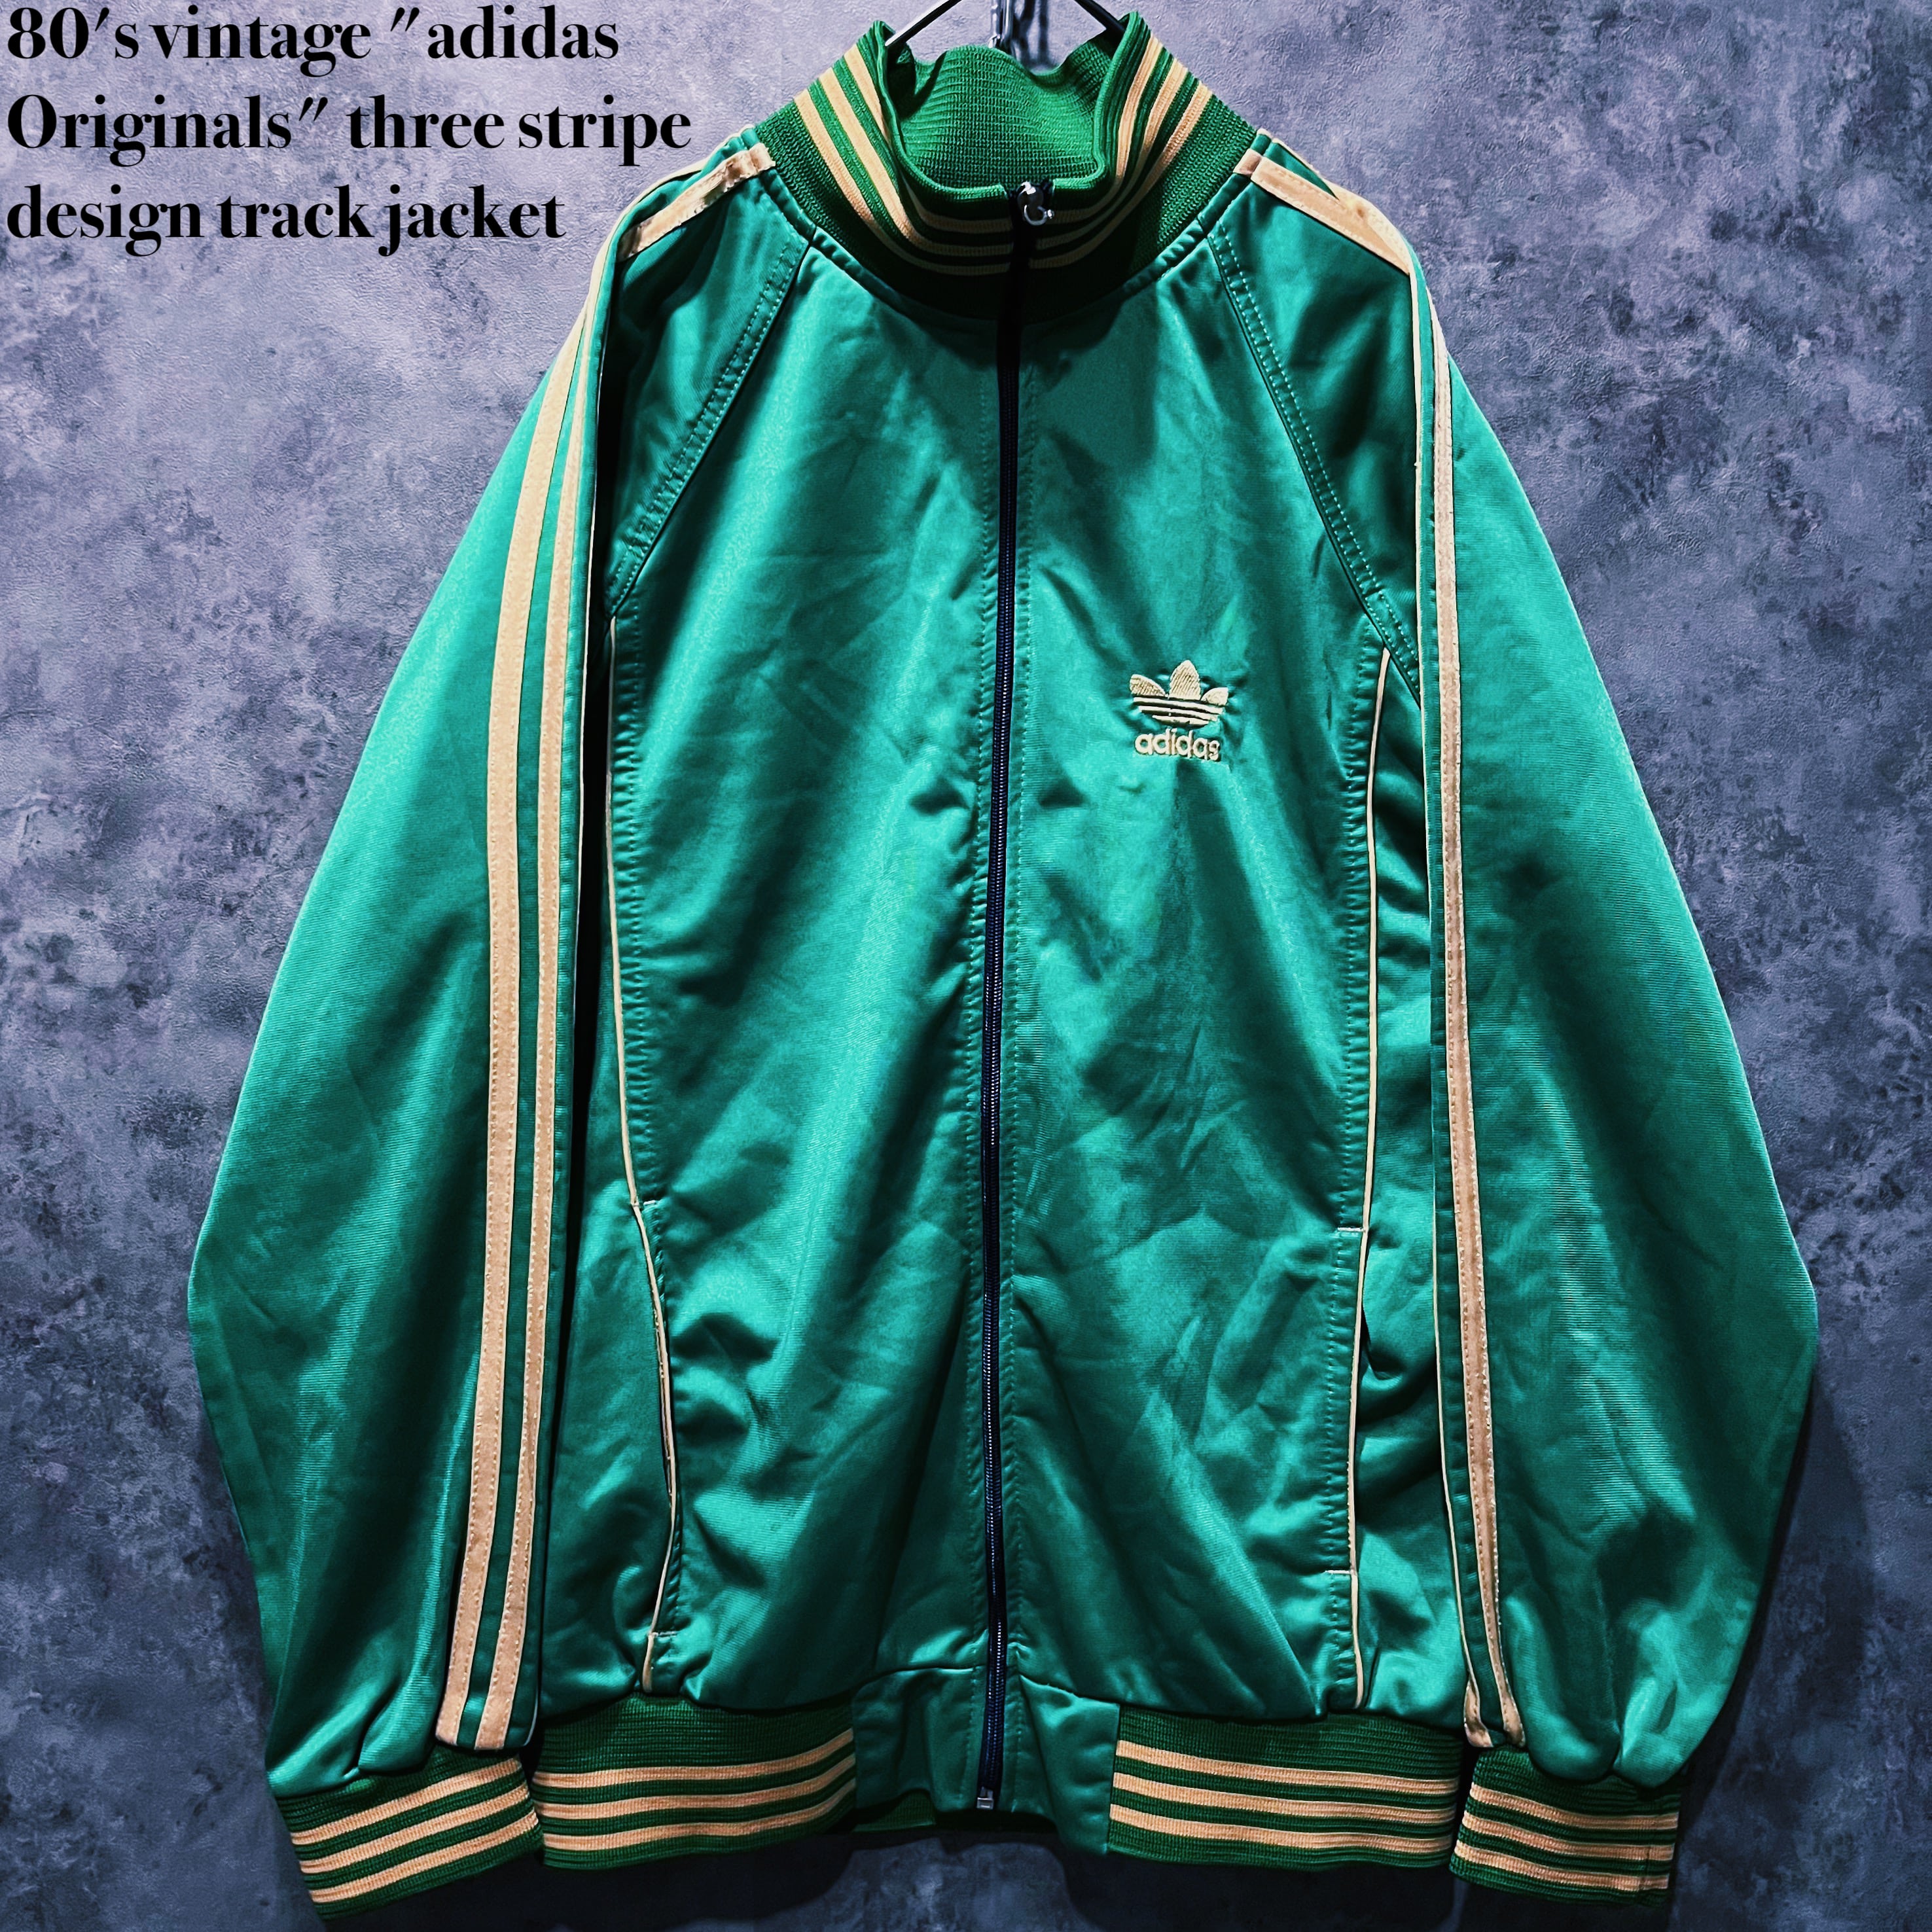 doppio】80's vintage "adidas Originals" three stripe design track jacket |  ayne